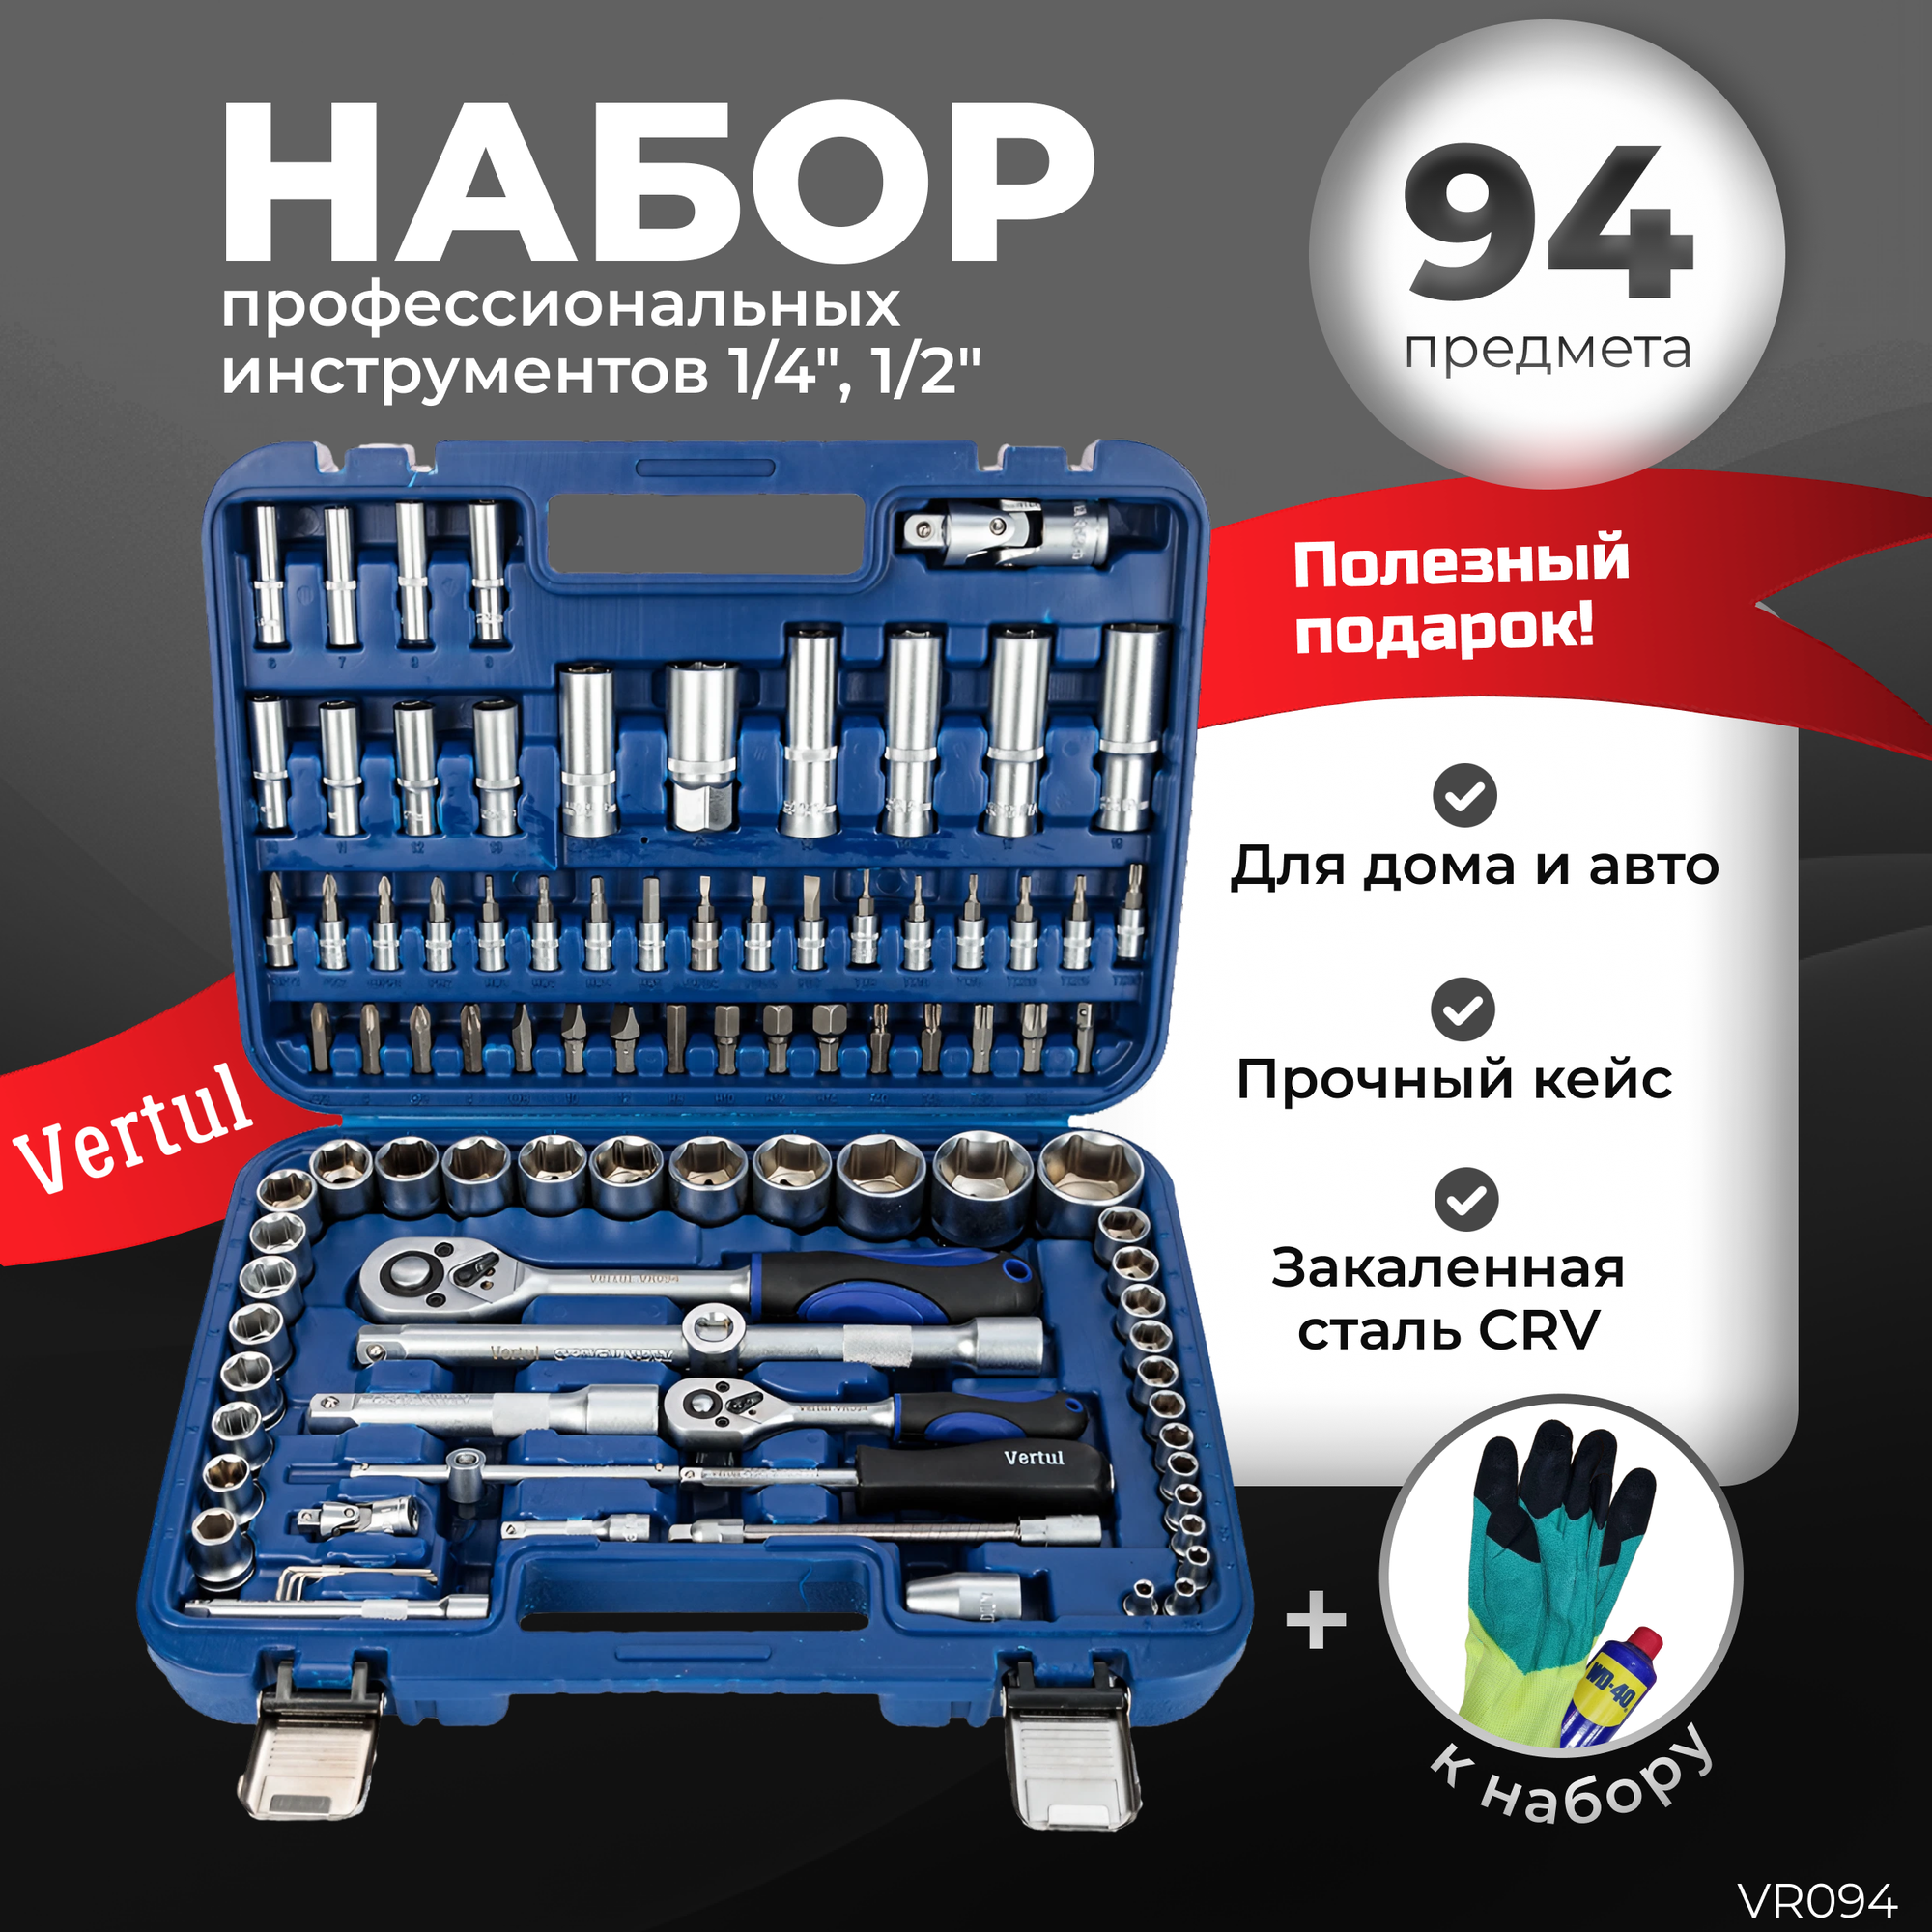 Набор инструментов 94 предмета 1/4", 1/2" Vertul VR094